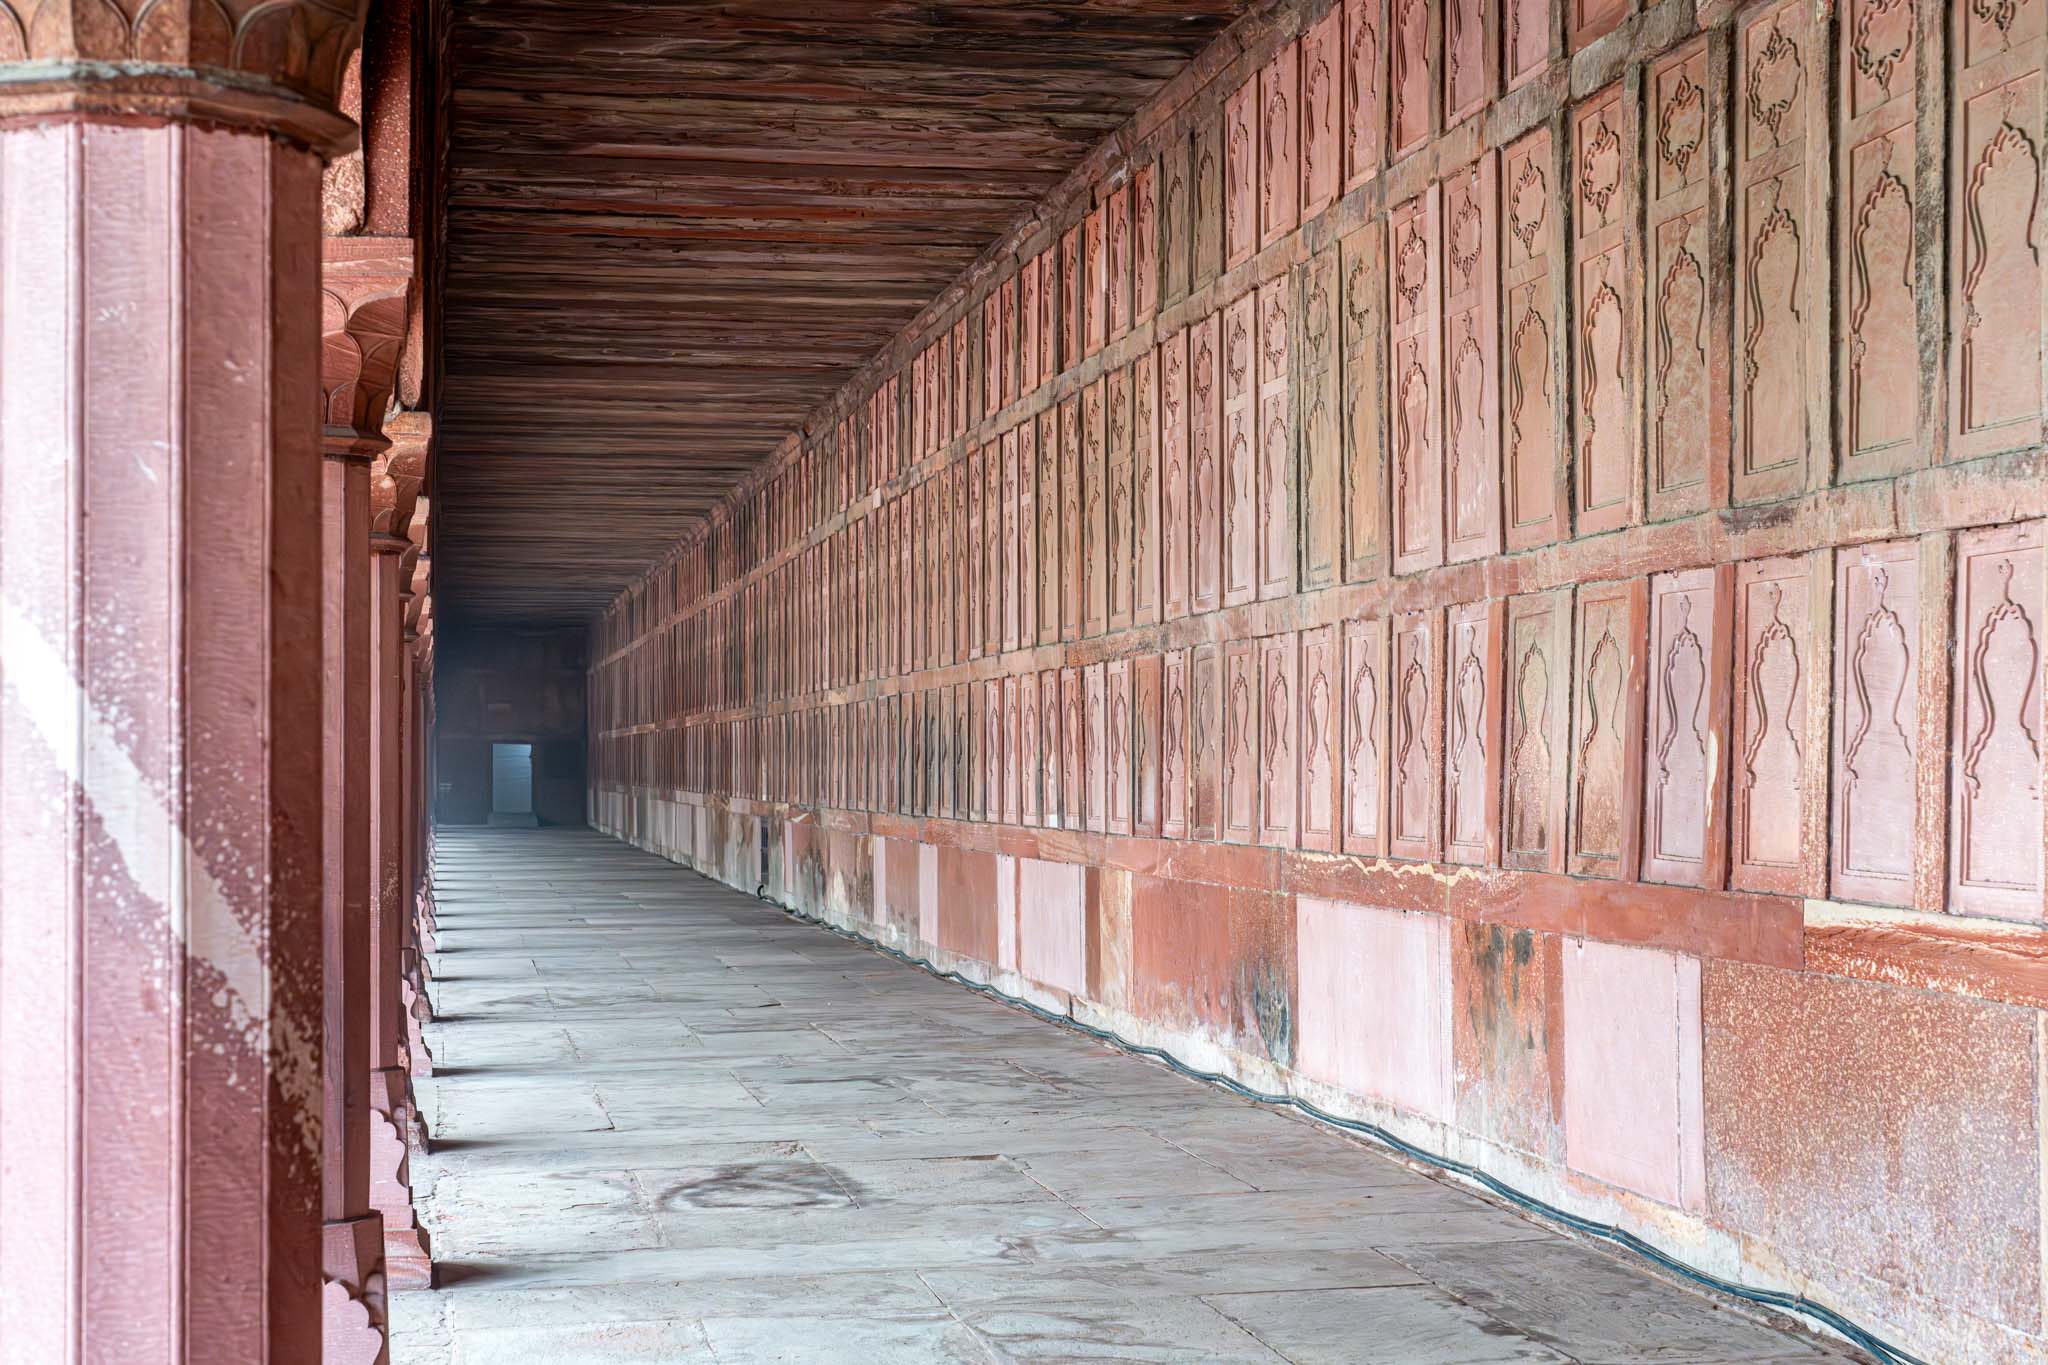 a long corridor with stone walls and pillars